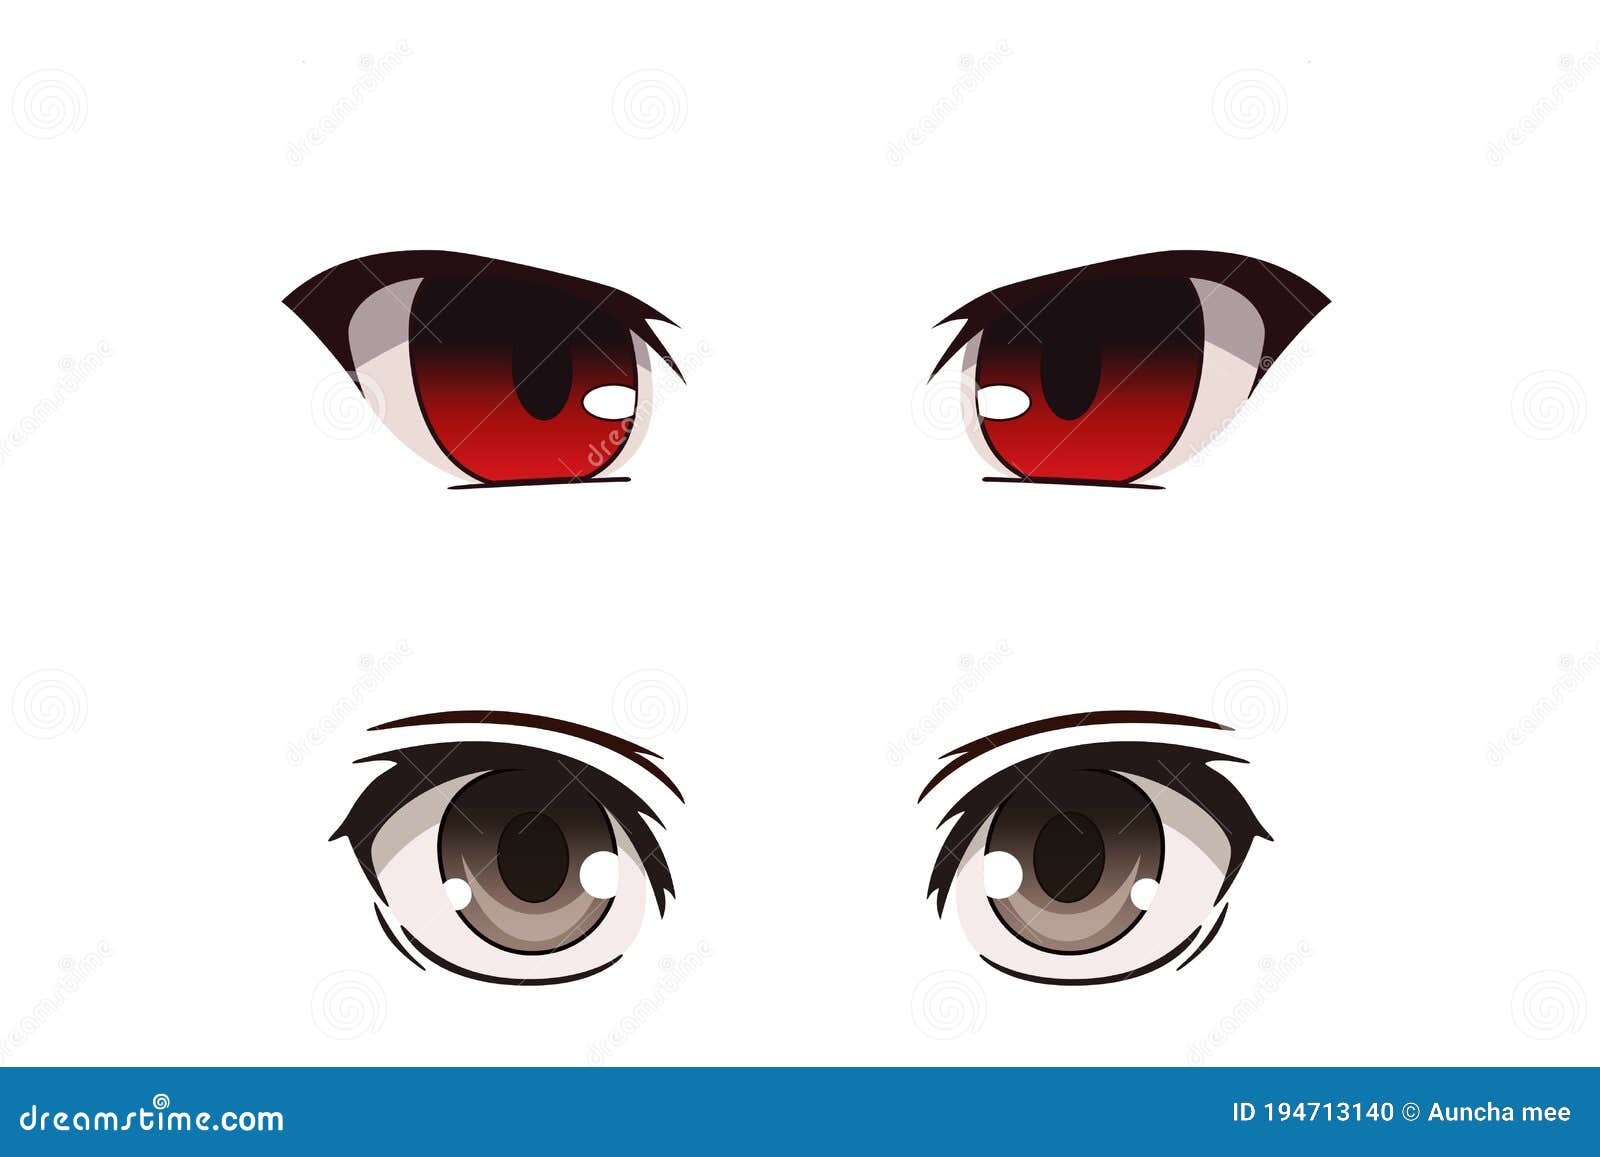 7,600+ Anime Eyes Stock Illustrations, Royalty-Free Vector